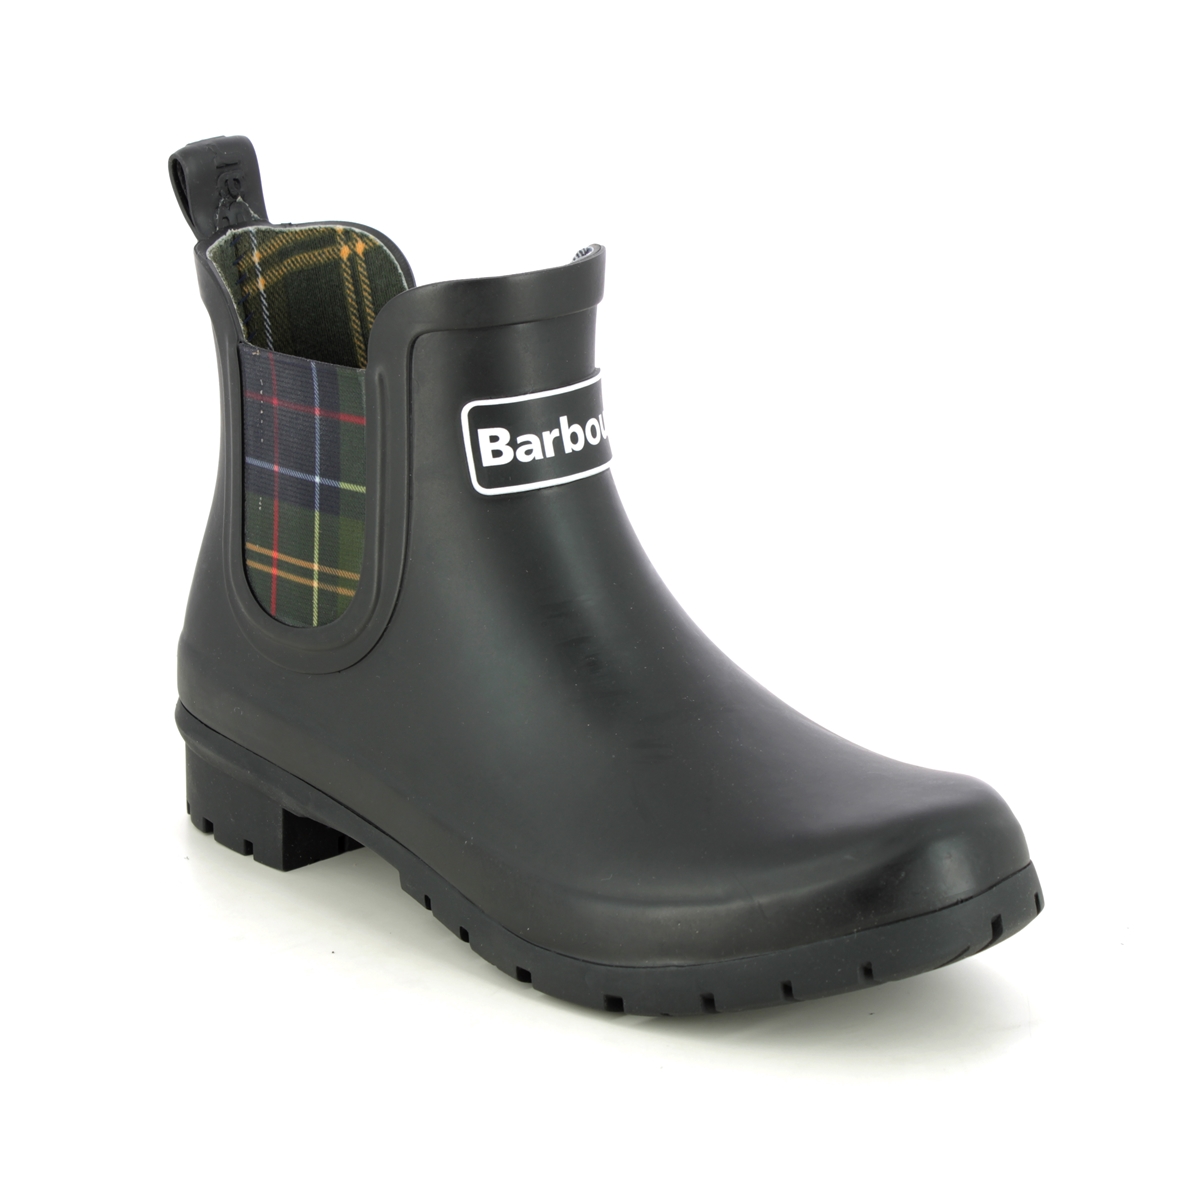 Barbour Kingham Wellie Black Boots Lrf0088-Bk11 In Size 6 In Plain Black